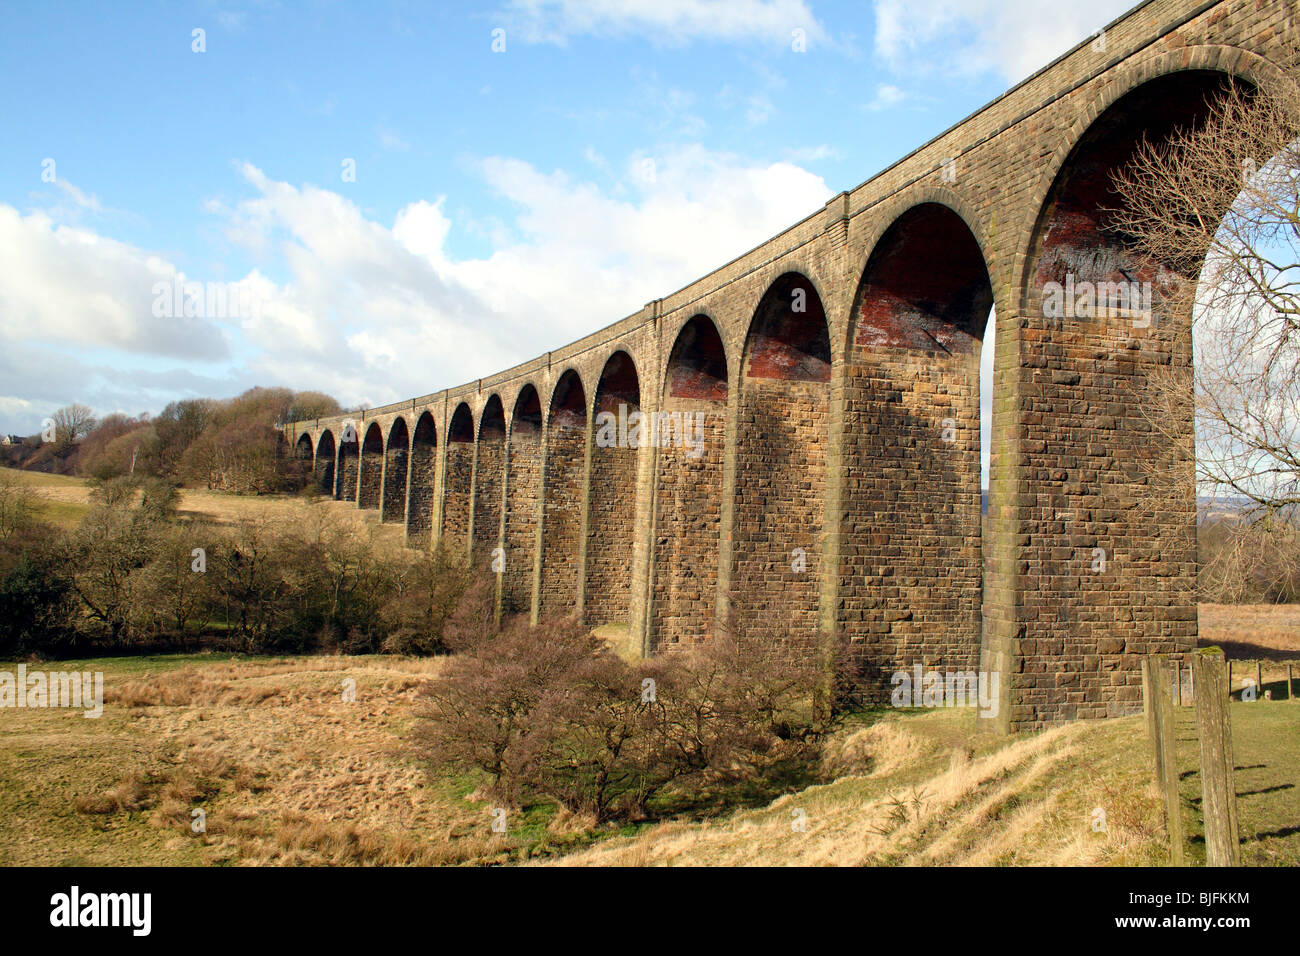 Hewenden Viaduct Cullingworth Yorkshire Arches Rail 397 yards de long Banque D'Images